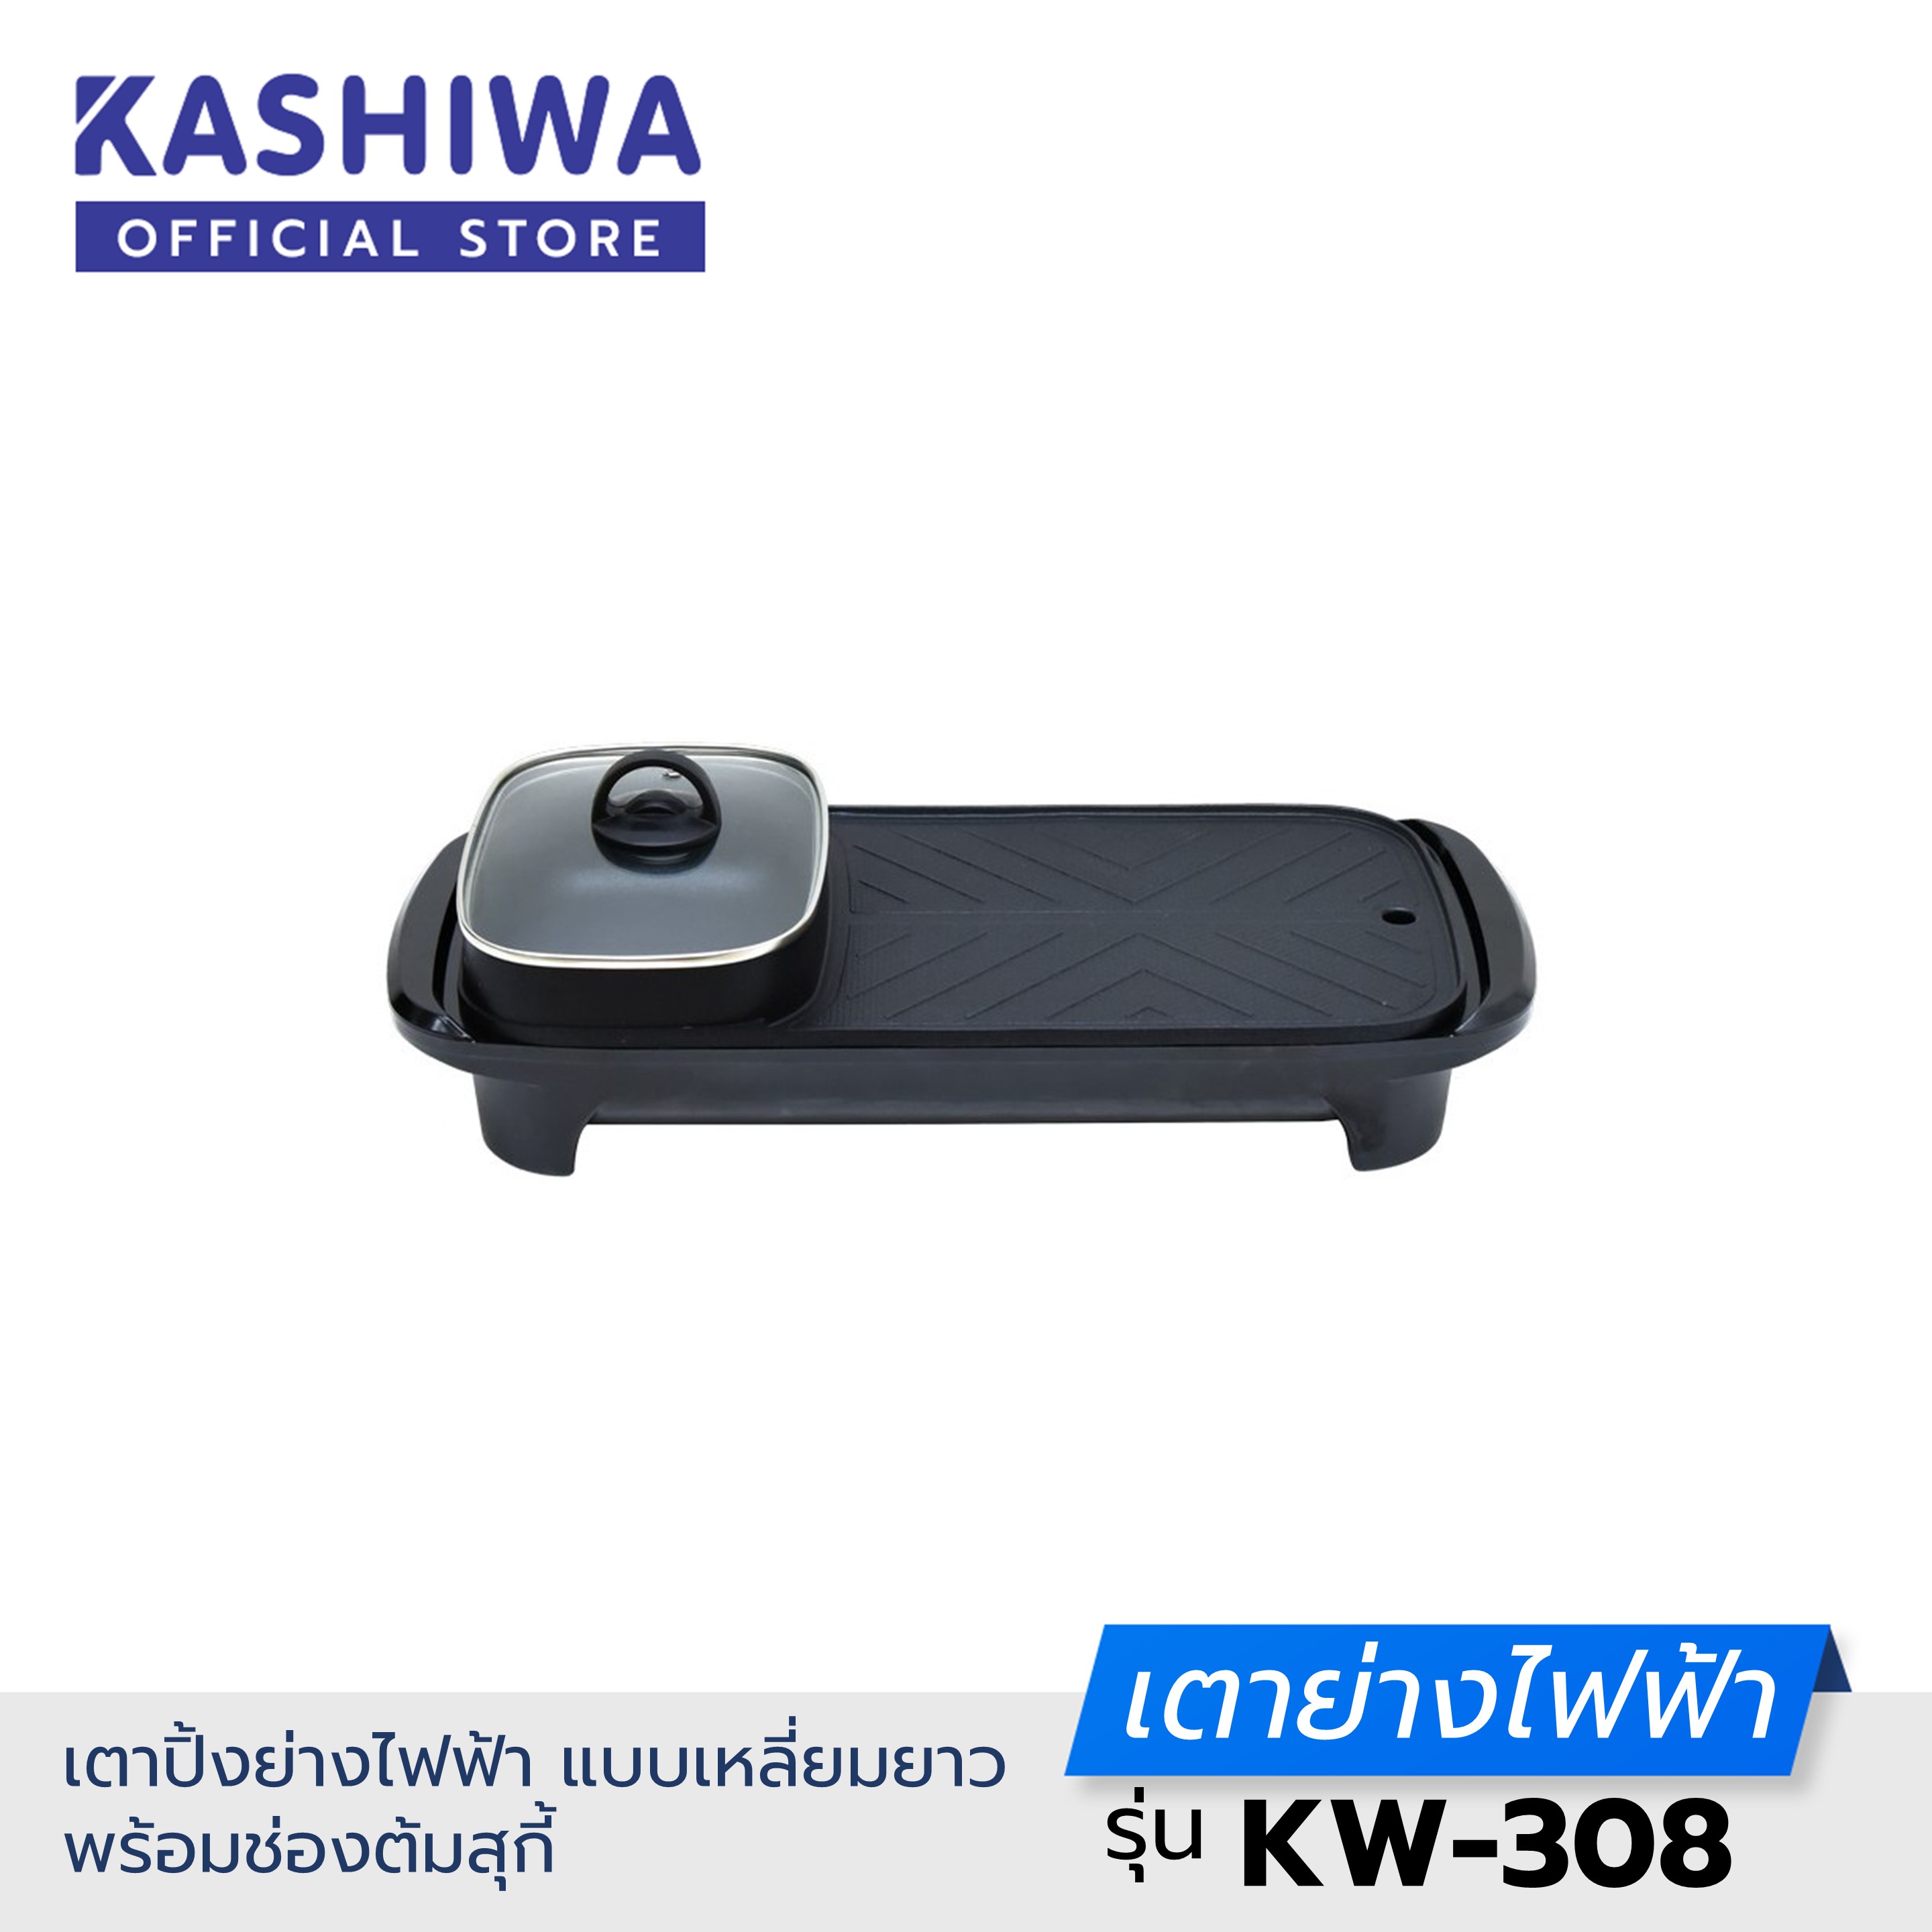 Kashiwa เตาย่าง ไฟฟ้า KW-308